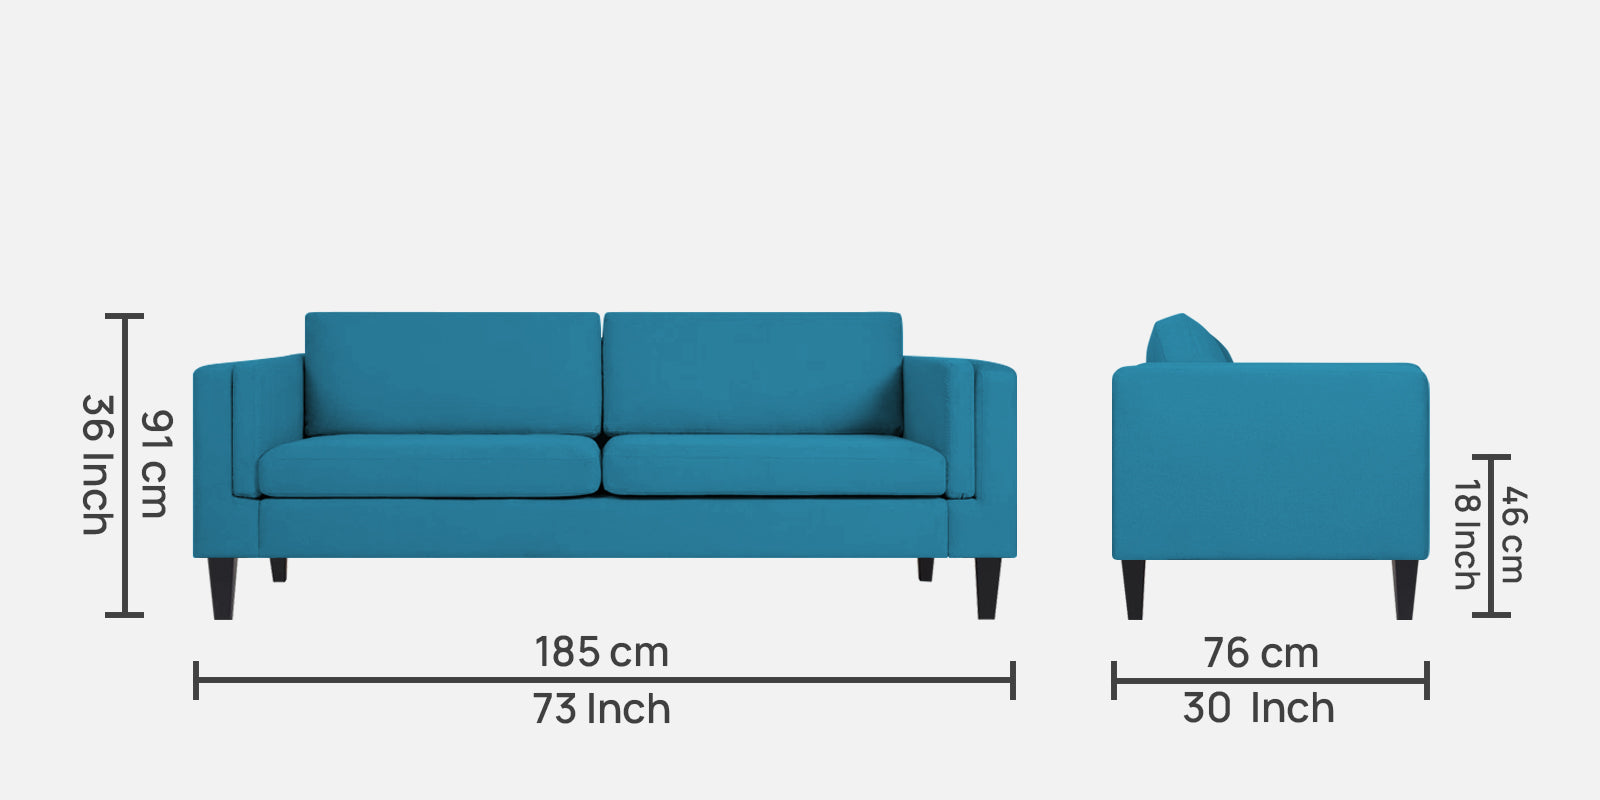 Jasper Velvet 3 Seater Sofa in Aqua blue Colour